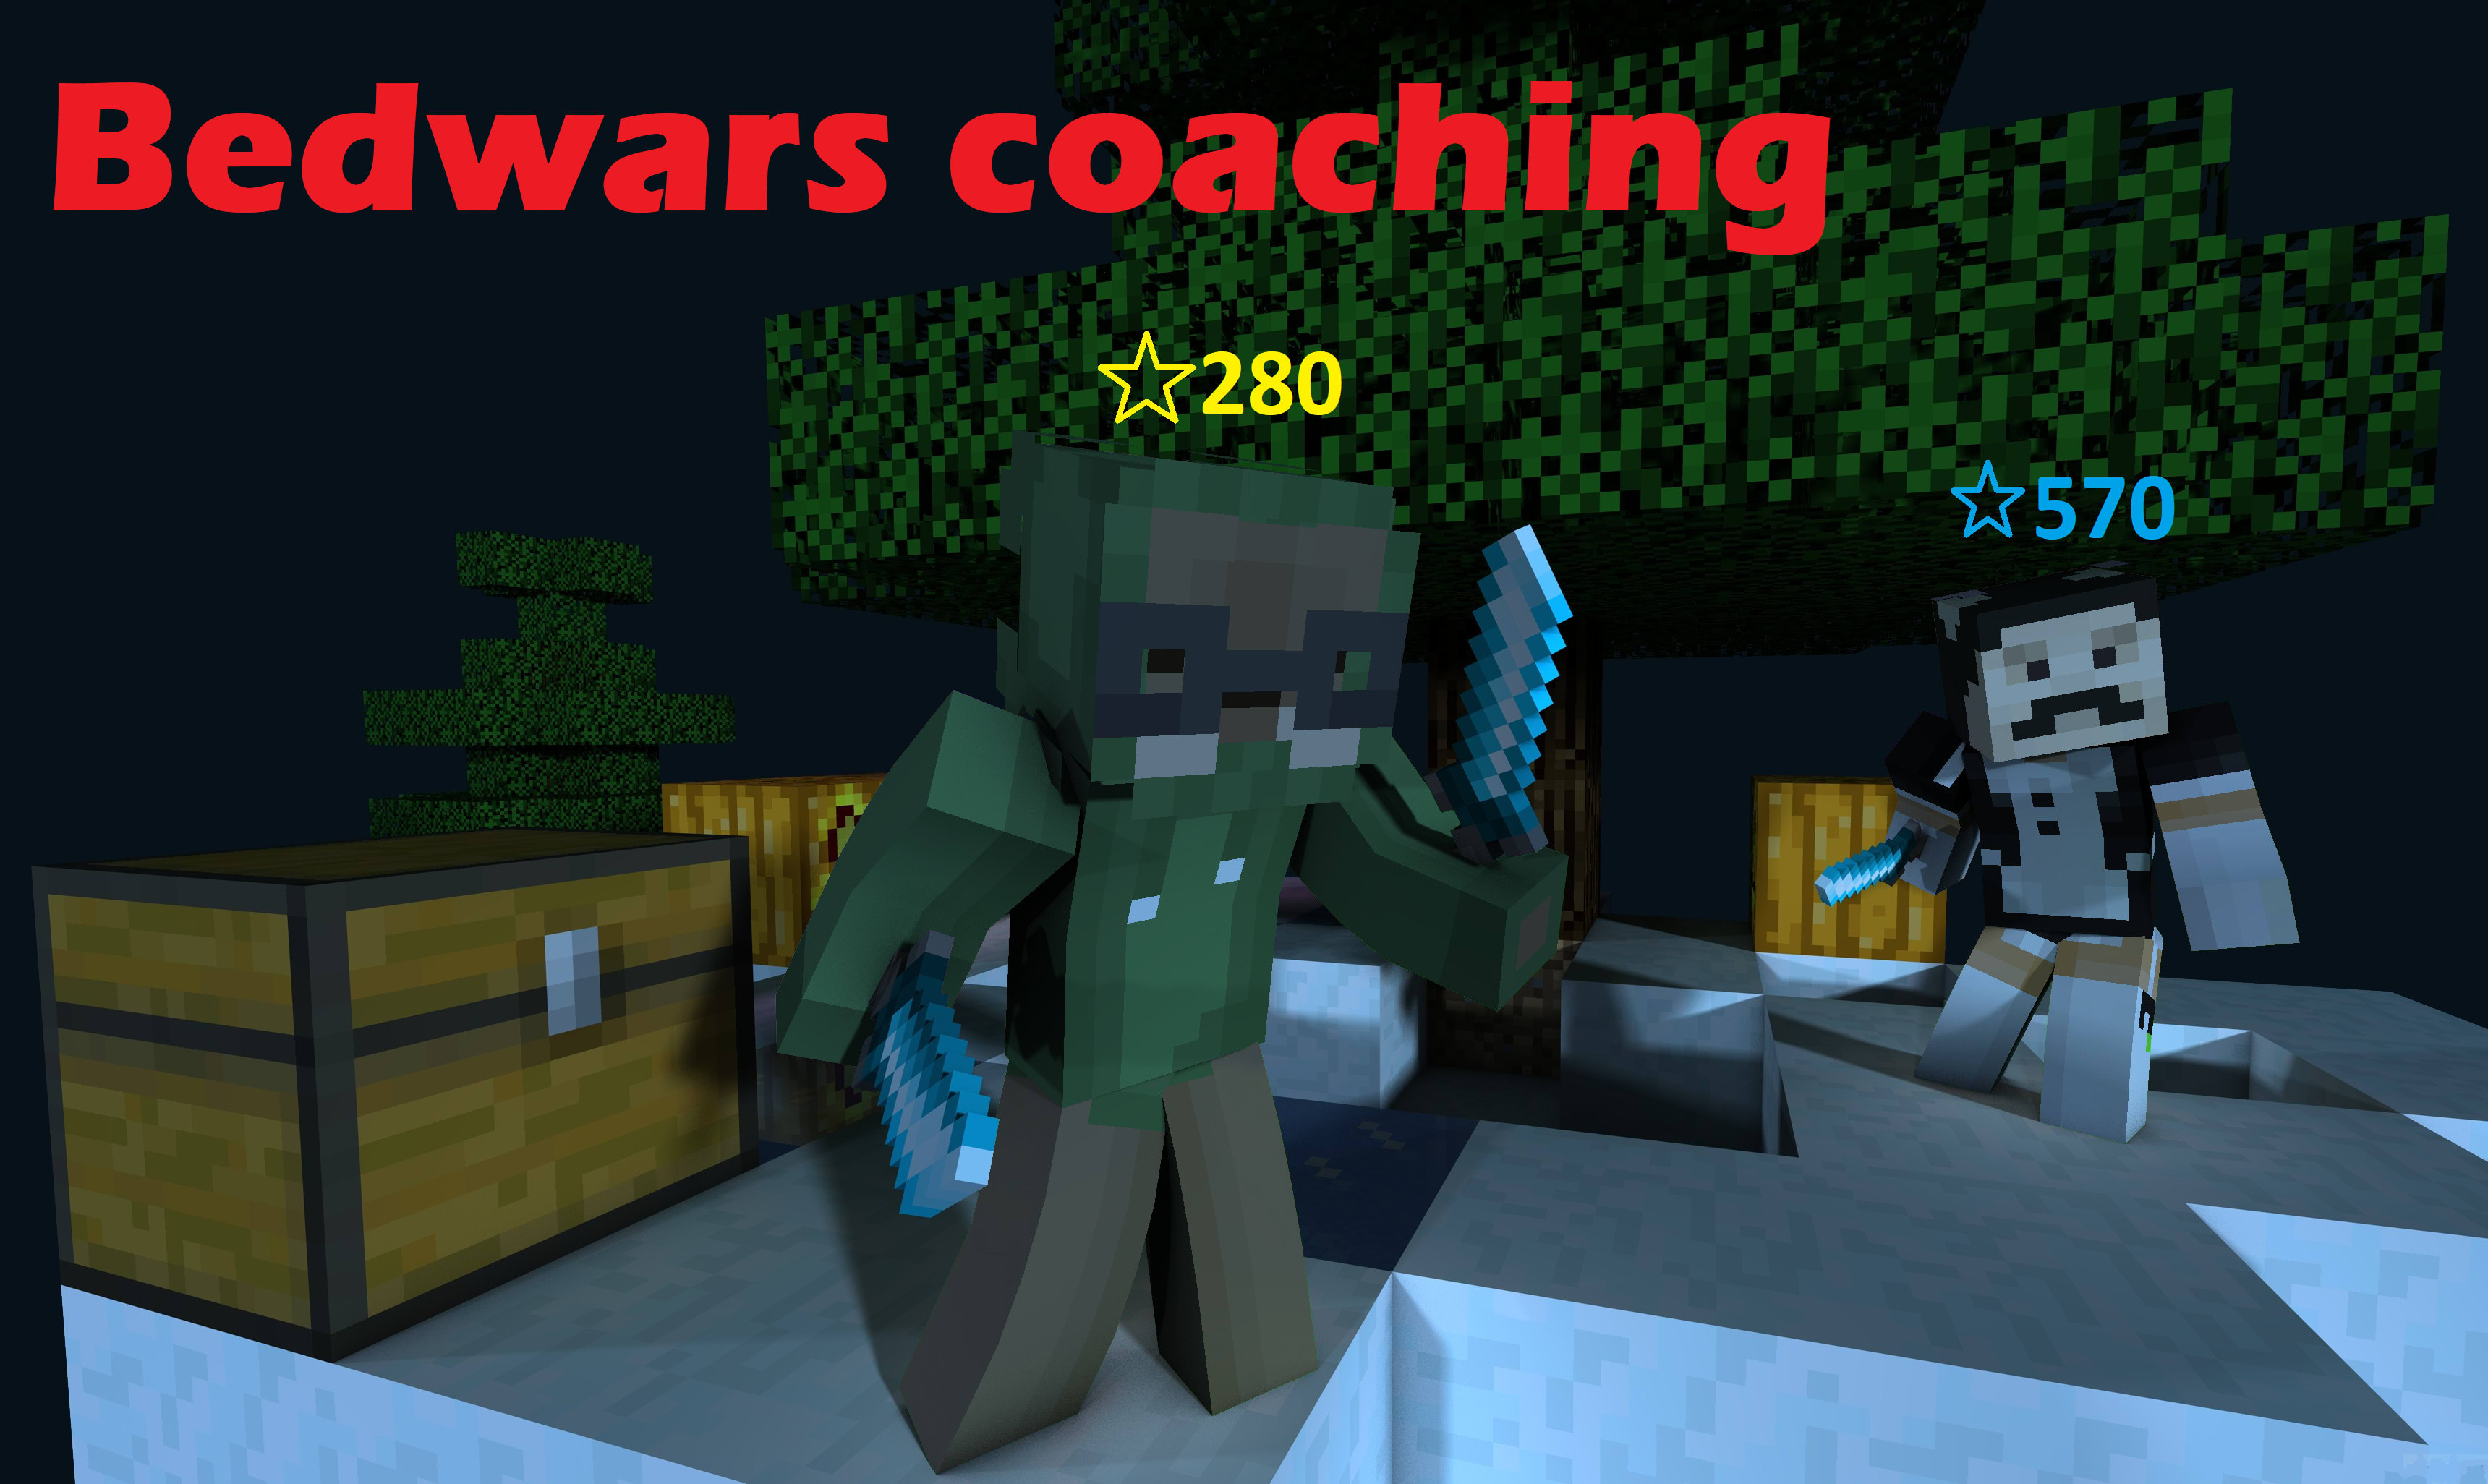 Coach you in minecraft bedwars by Danielpaini